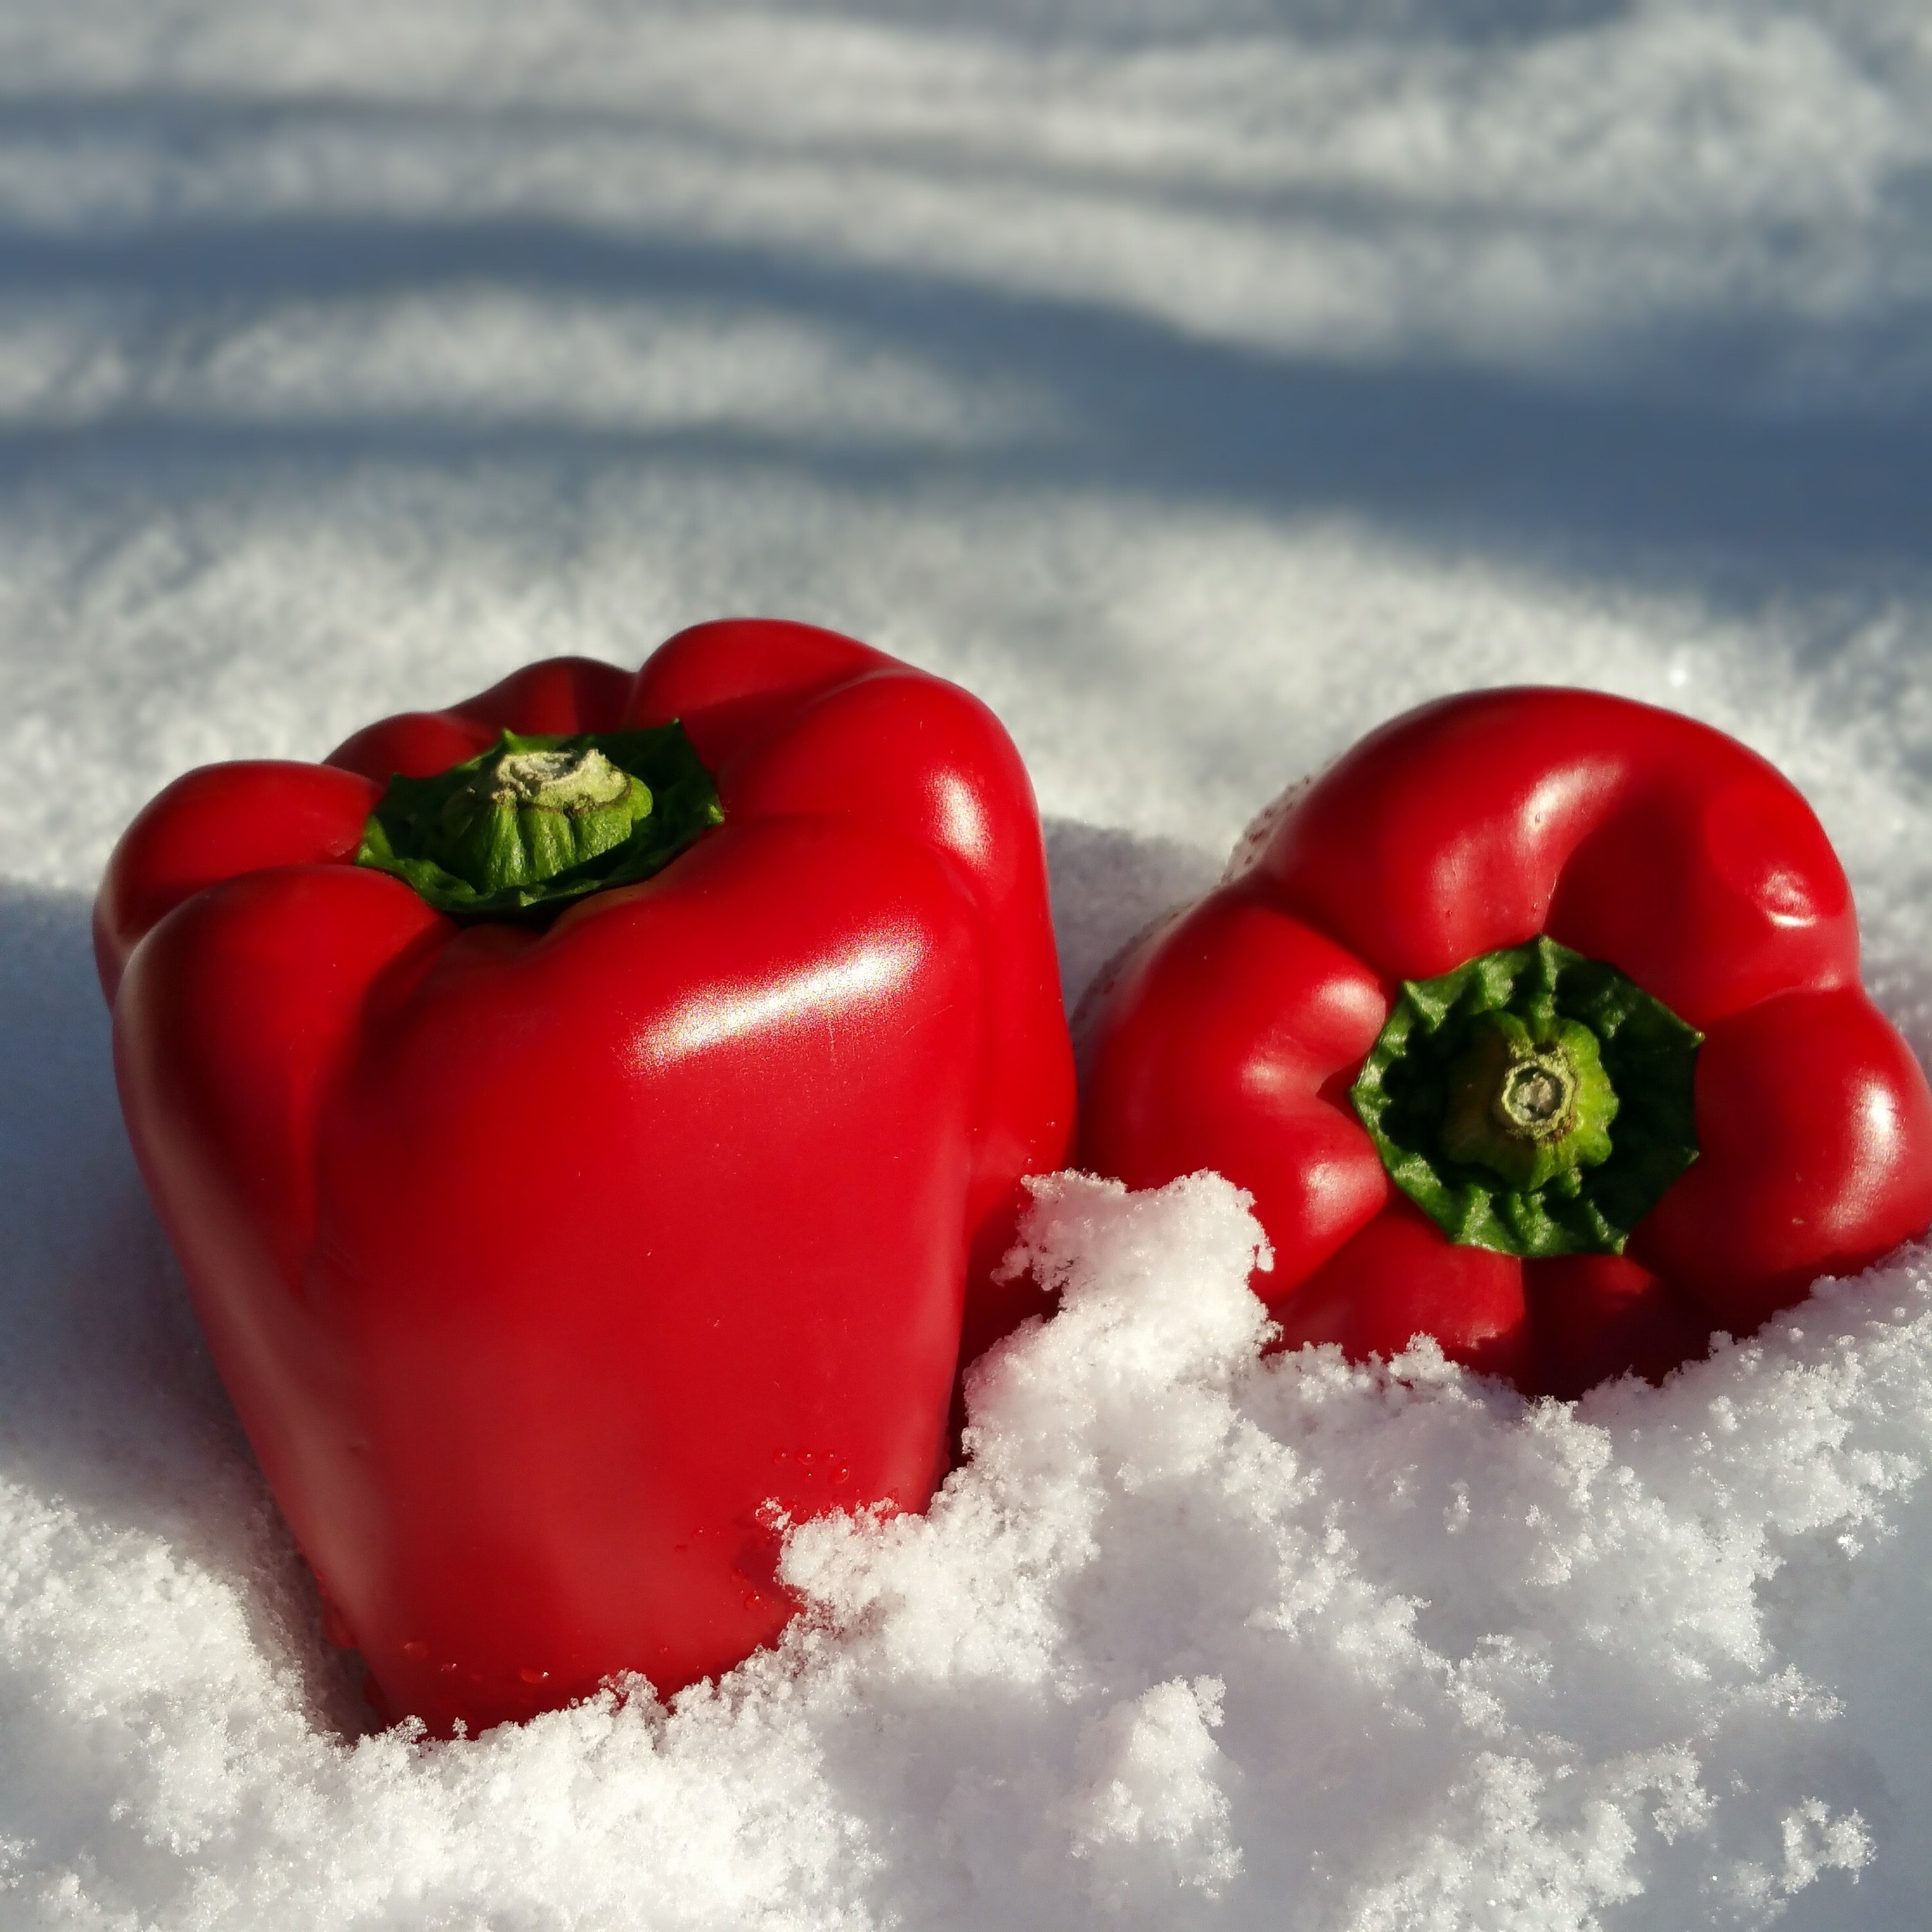 2 red bell pepper